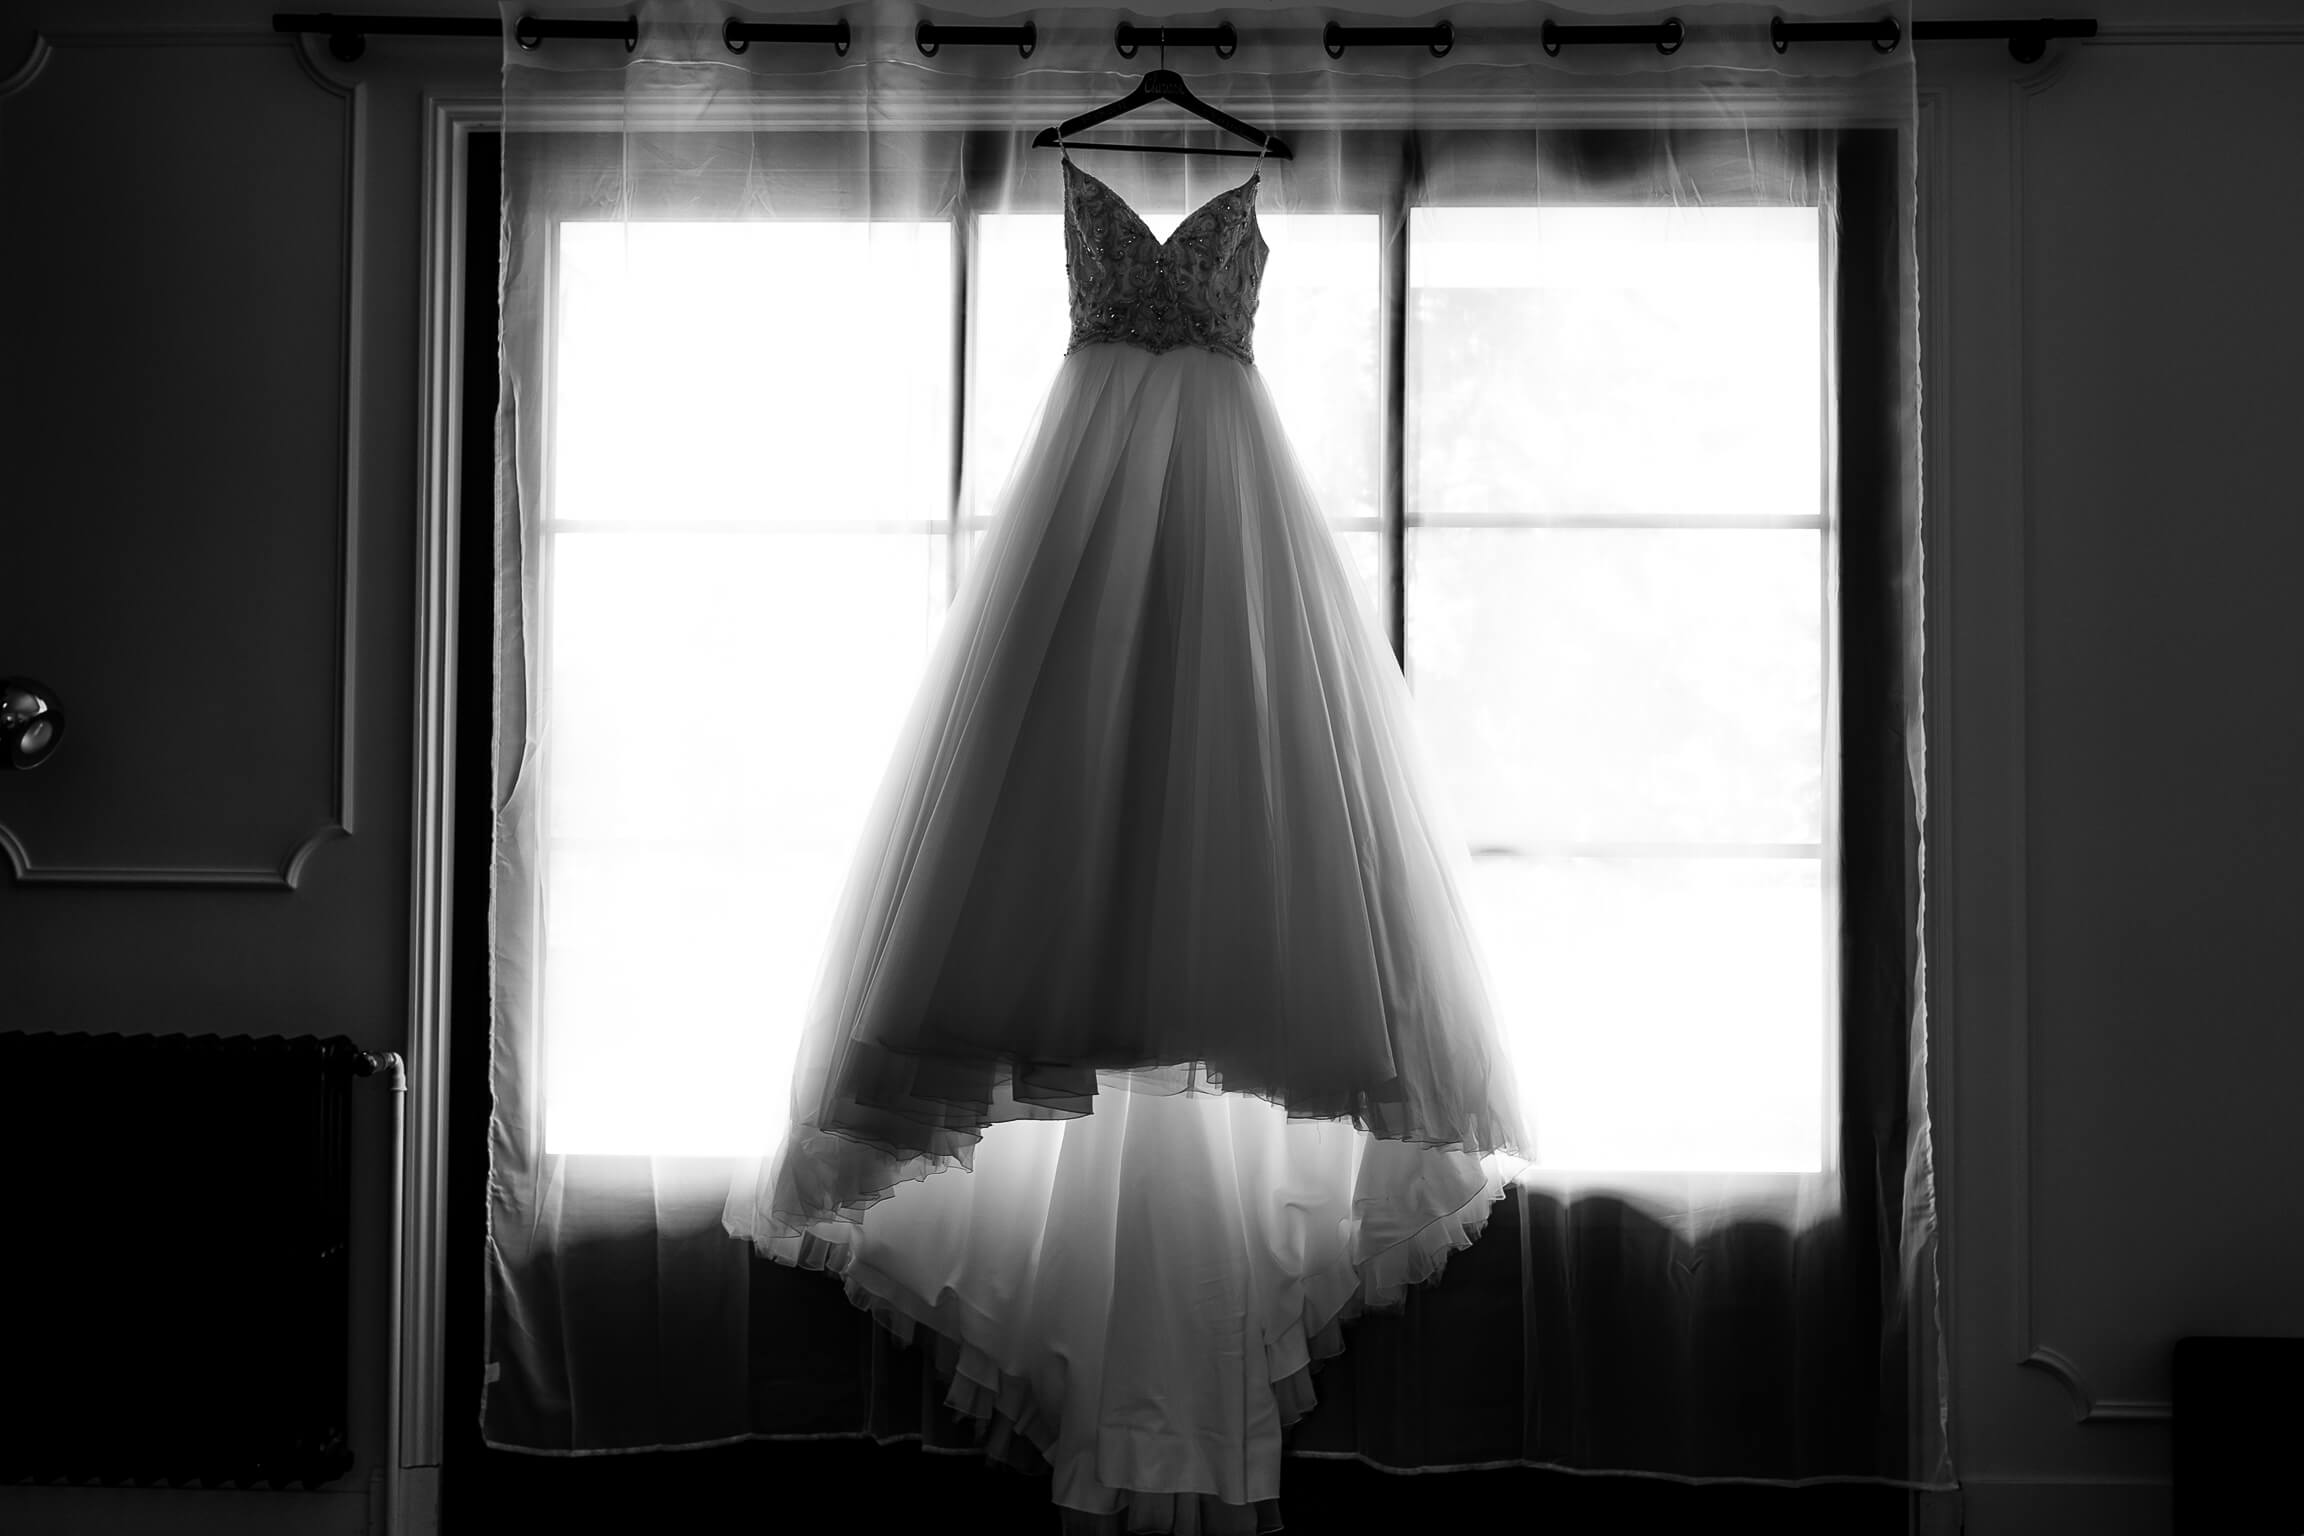 la robe de mariee pendant les preparatifs